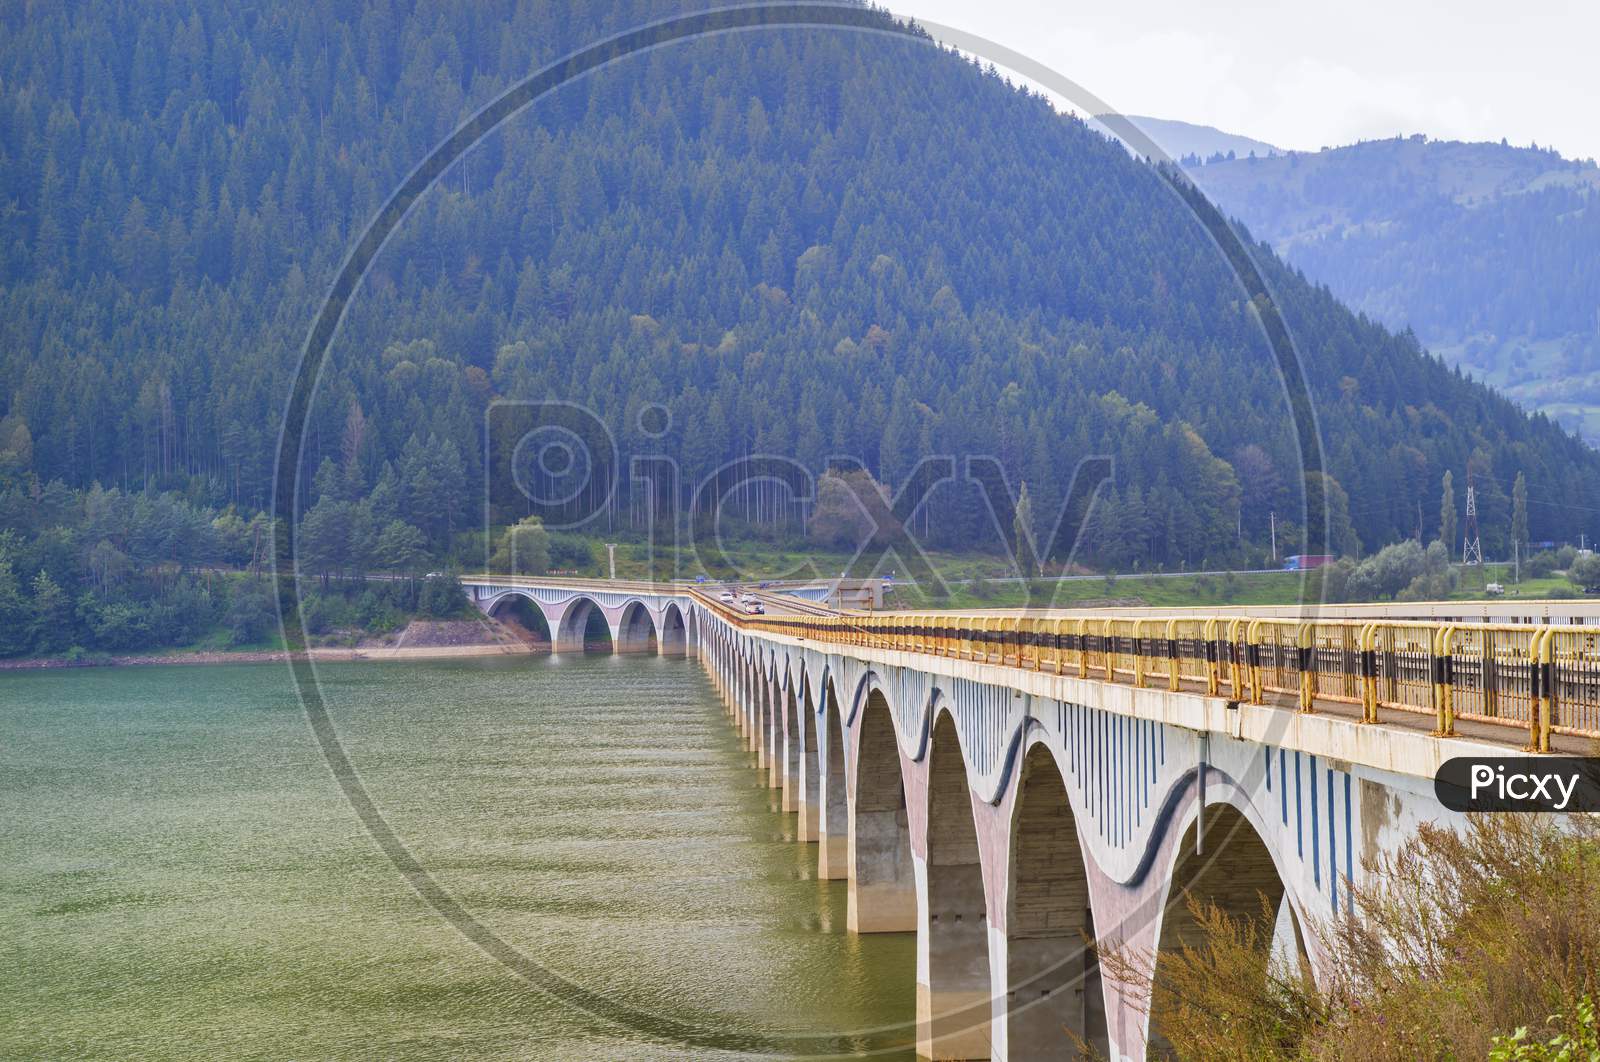 Stone Bridge For Highway Over River